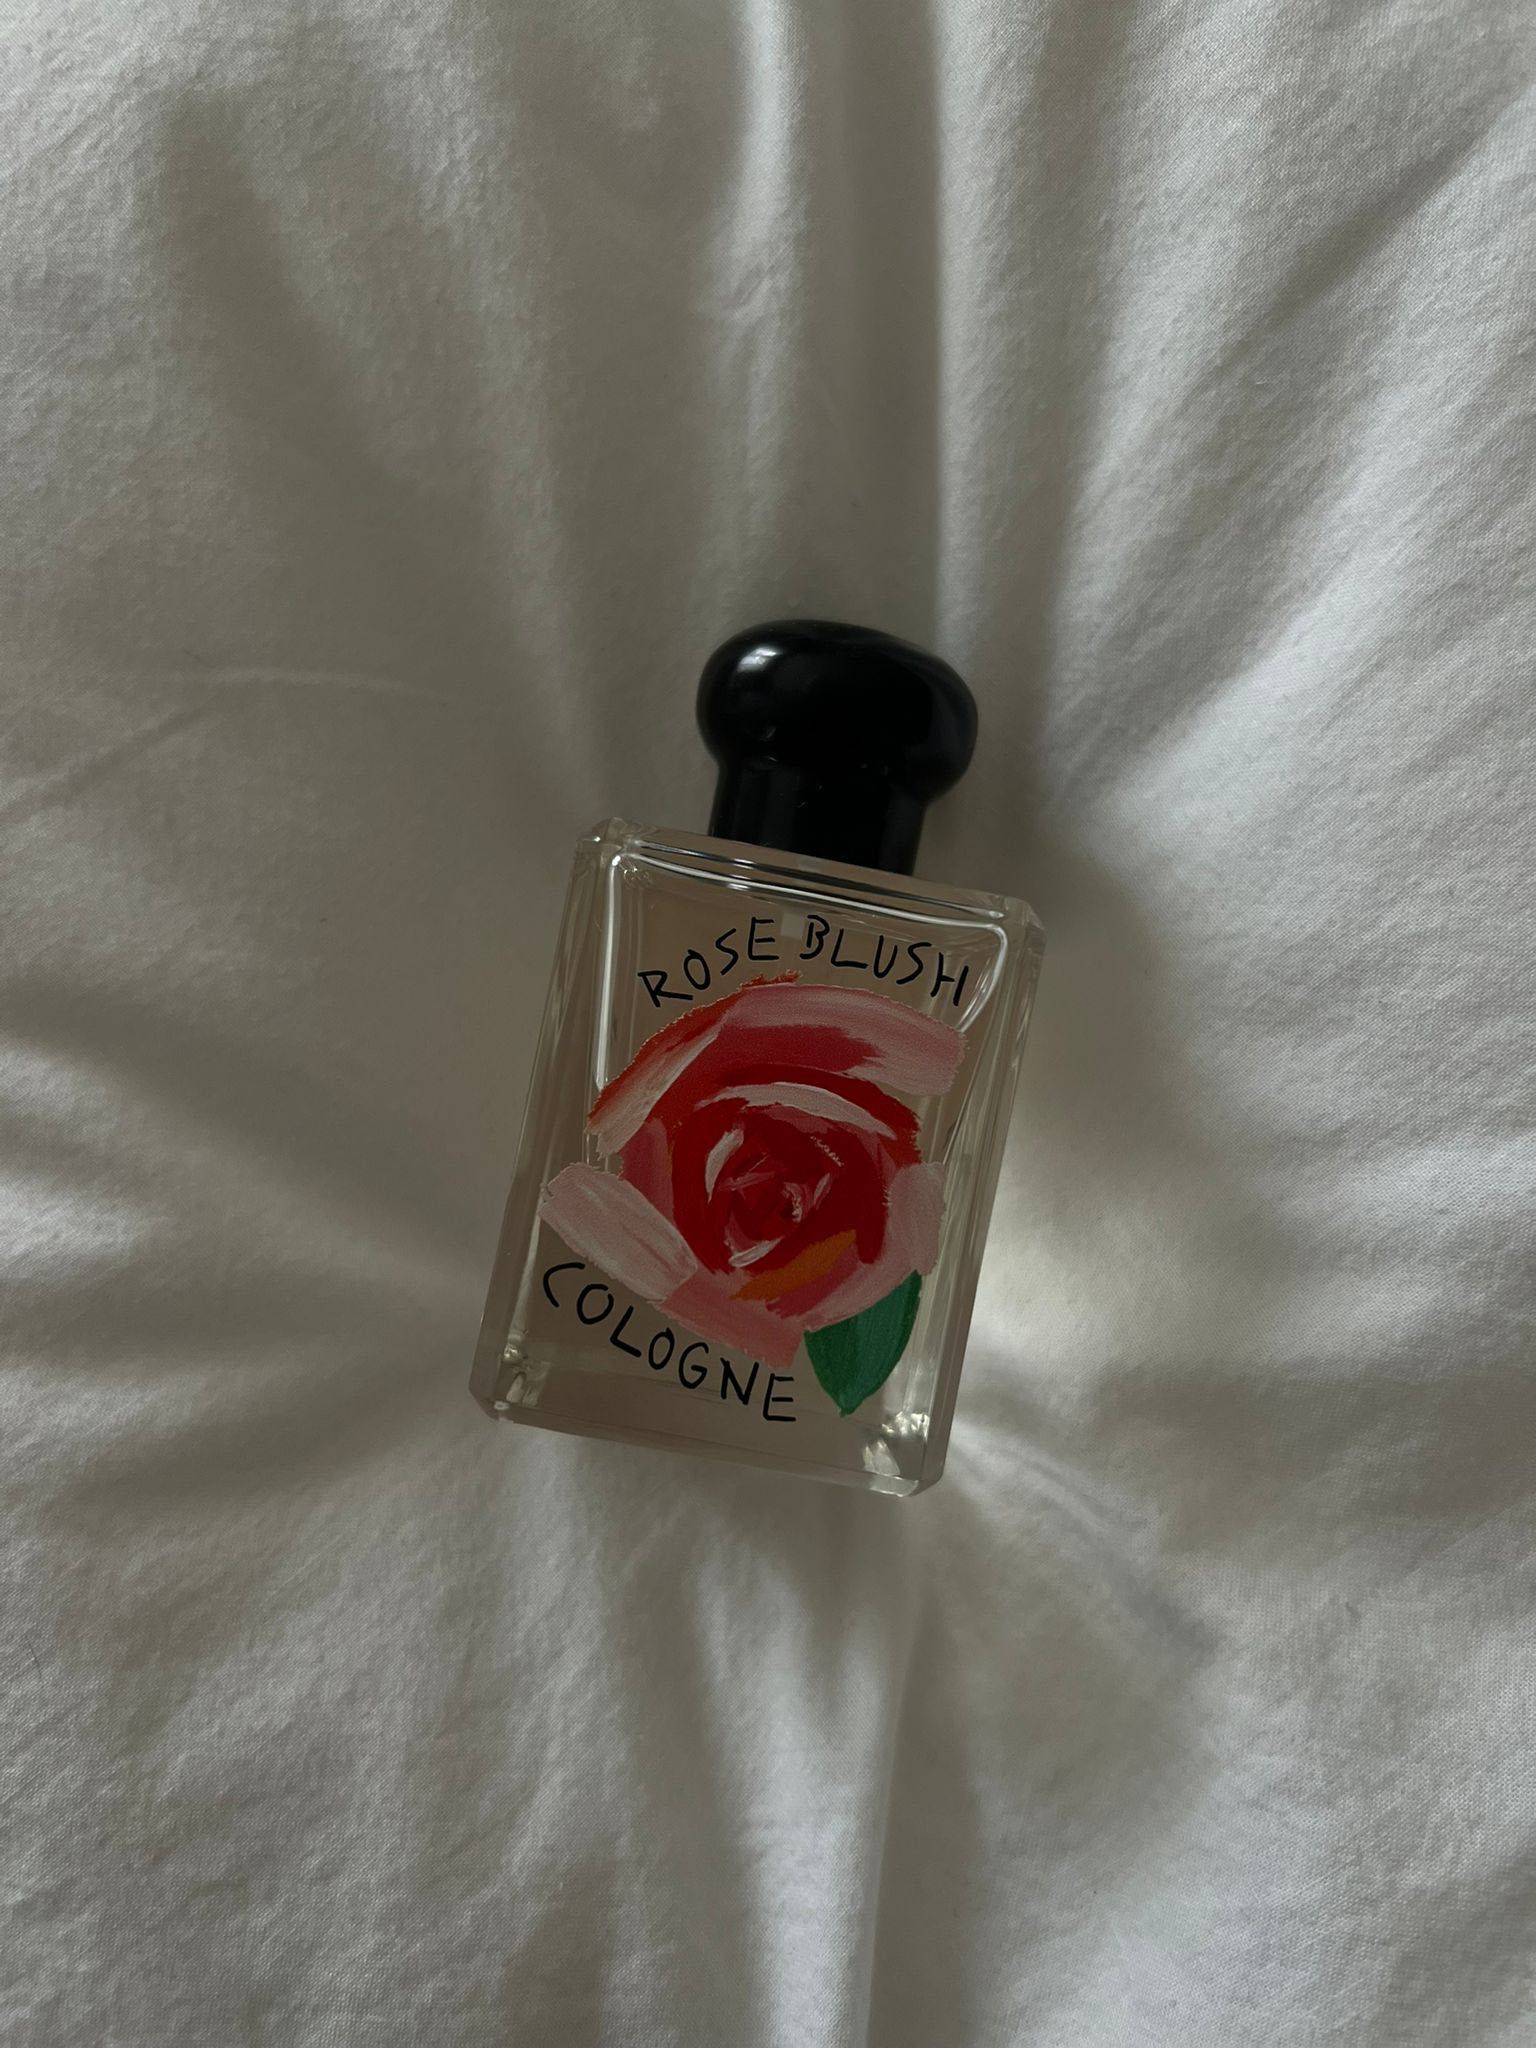 Perfum jo malone rose blush rose magnolia cologne 50ml walentynki